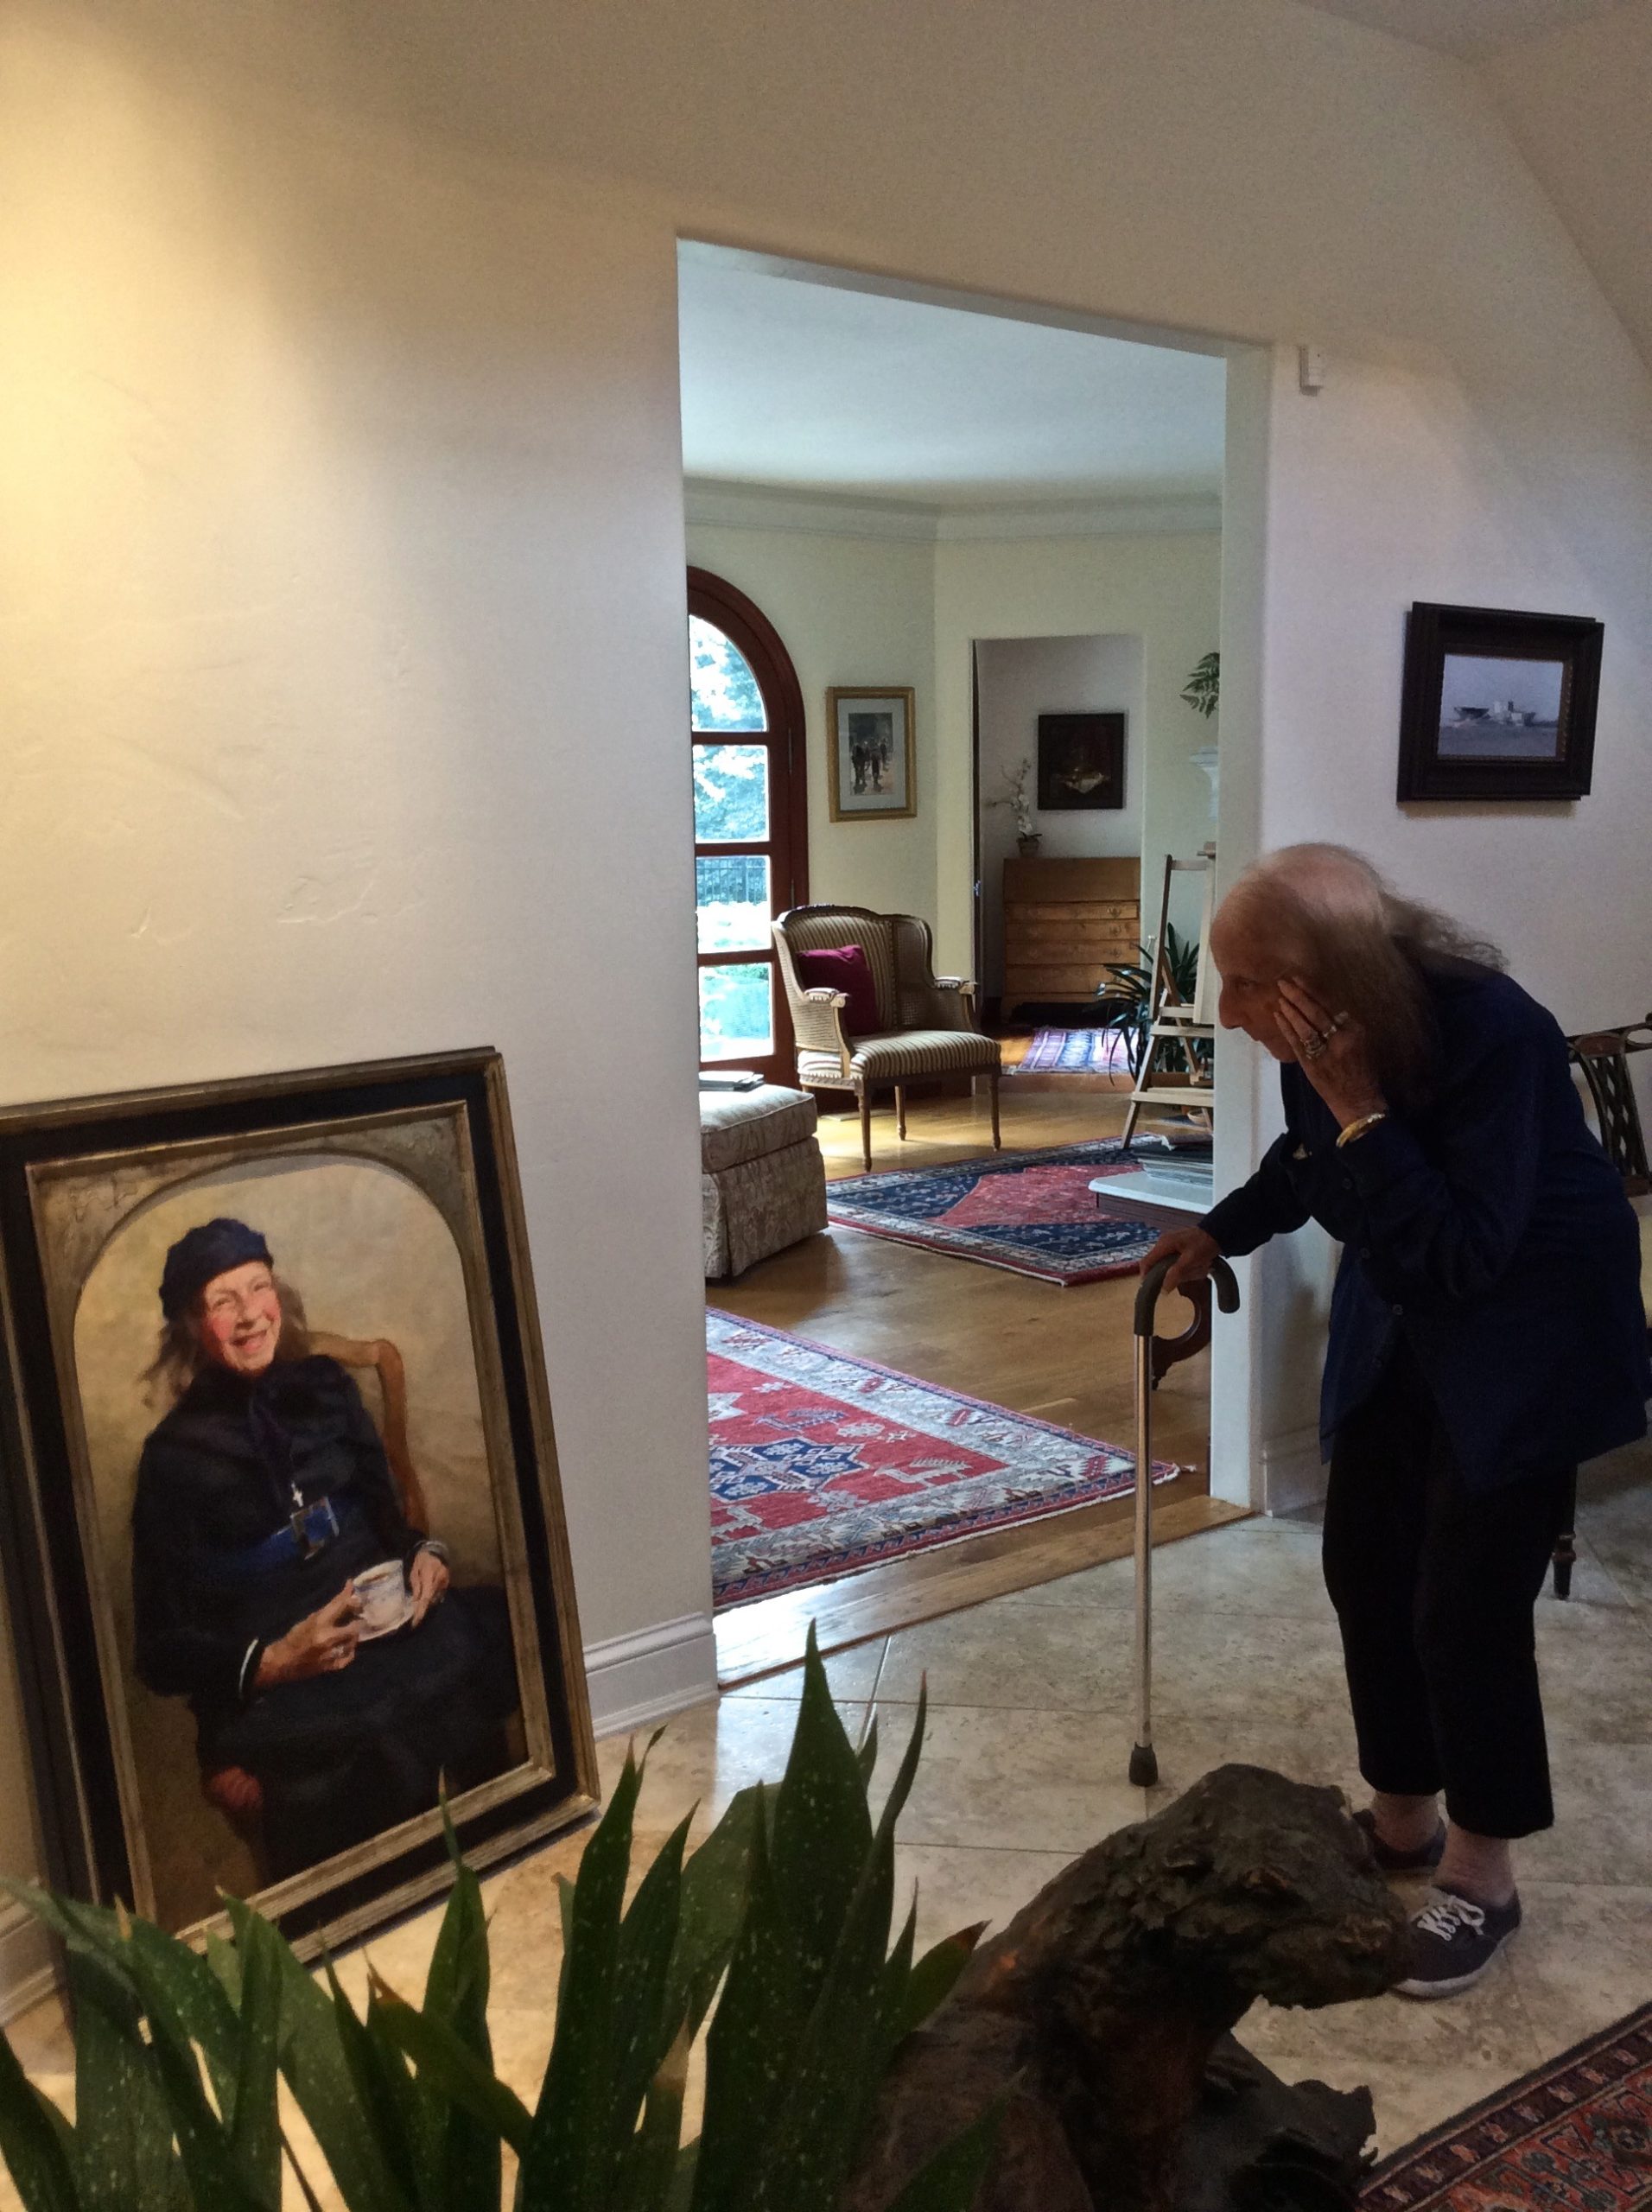 Mrs. Tardi, seeing her portrait painting